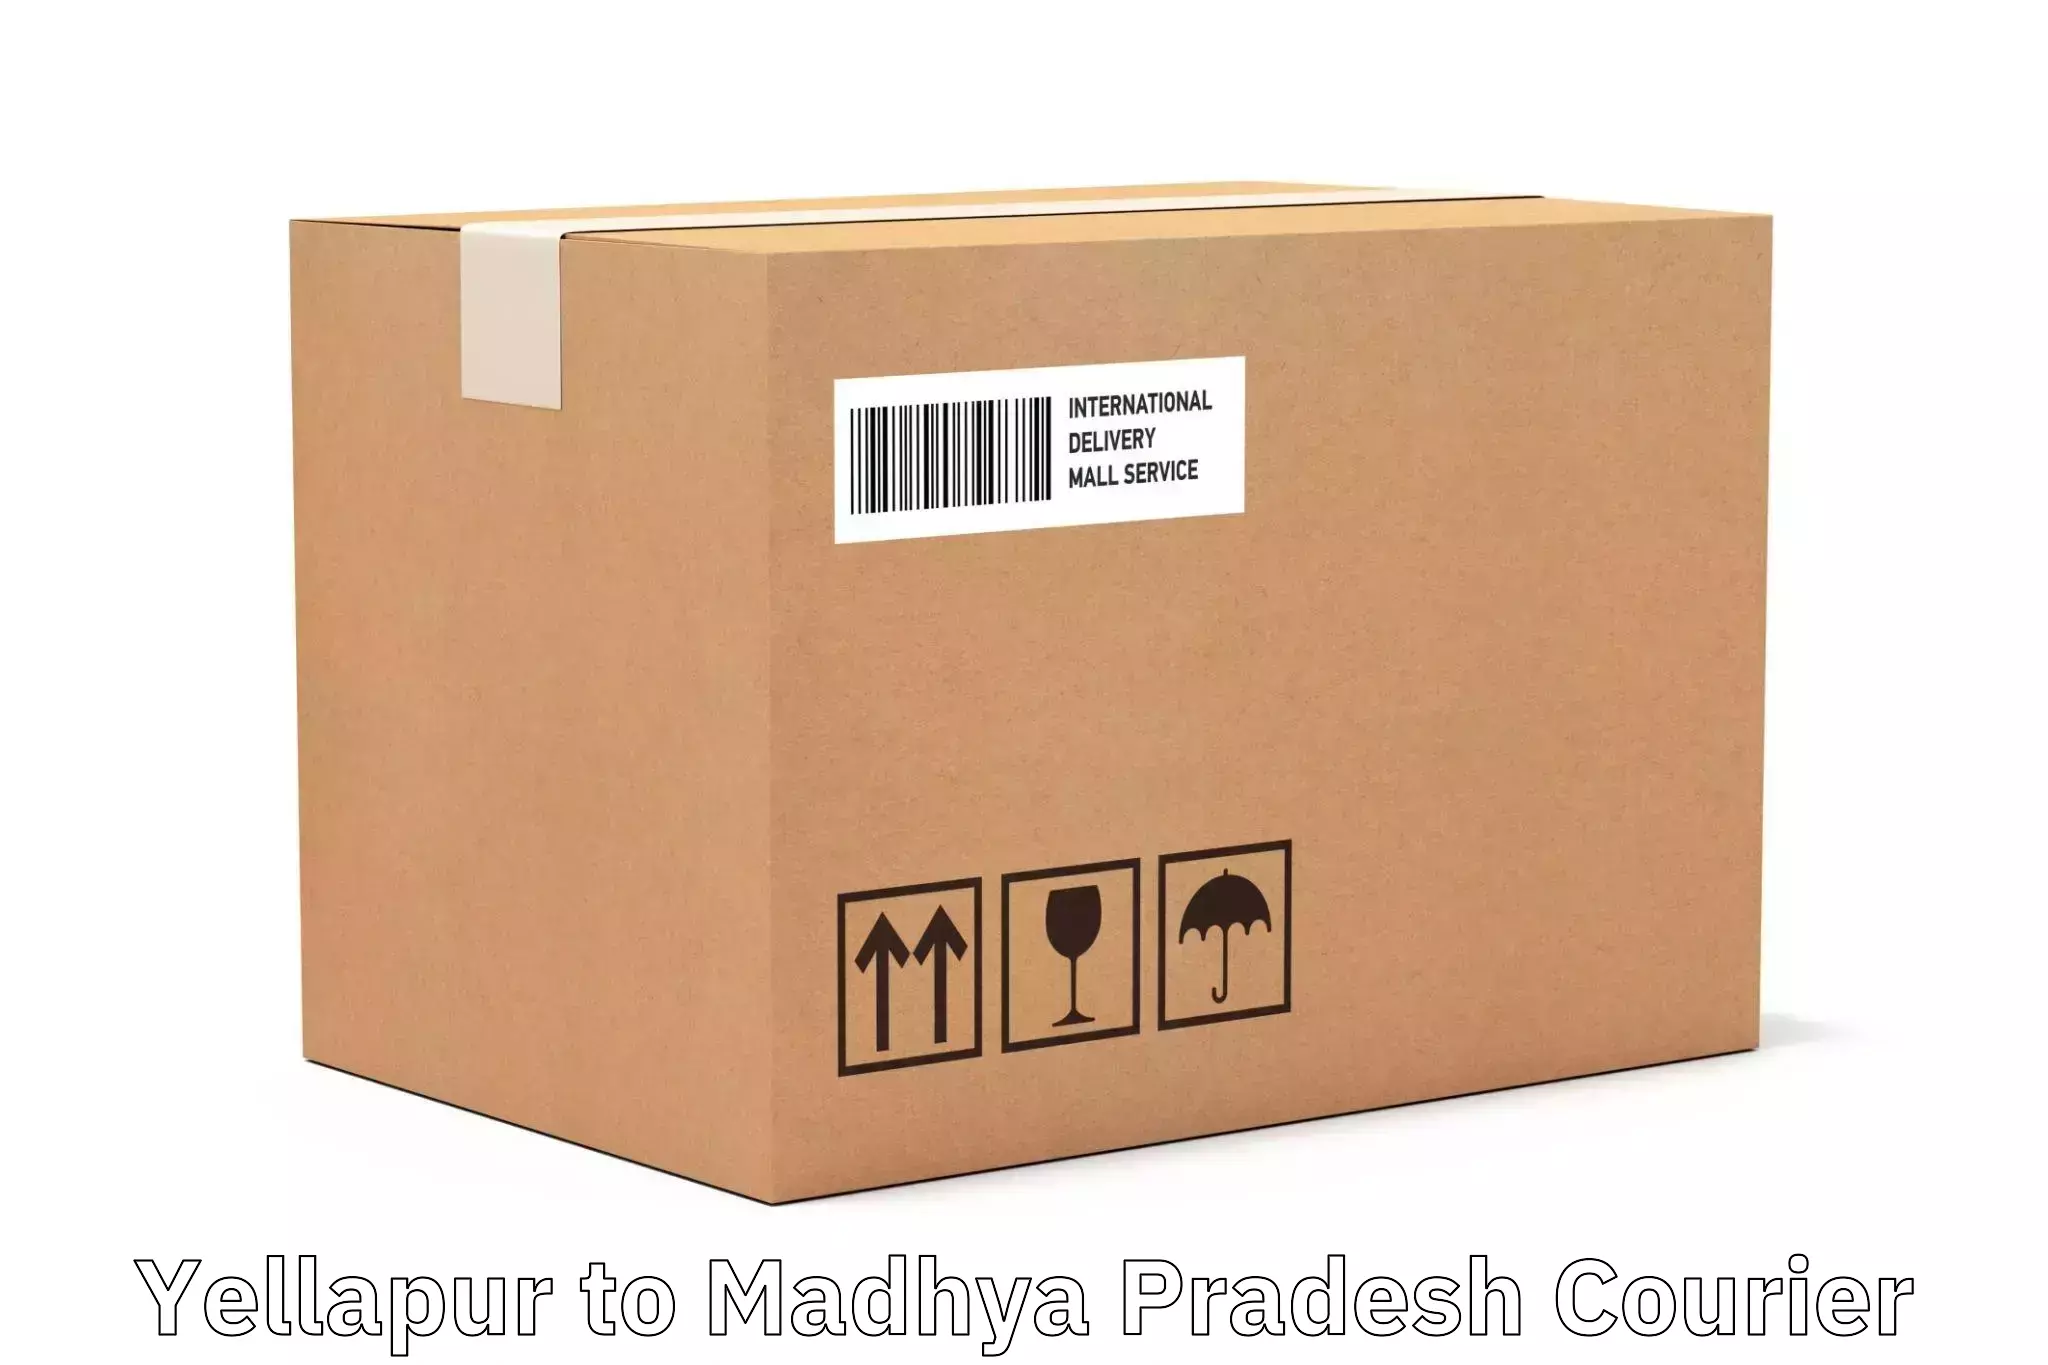 Express courier capabilities Yellapur to Udaipura